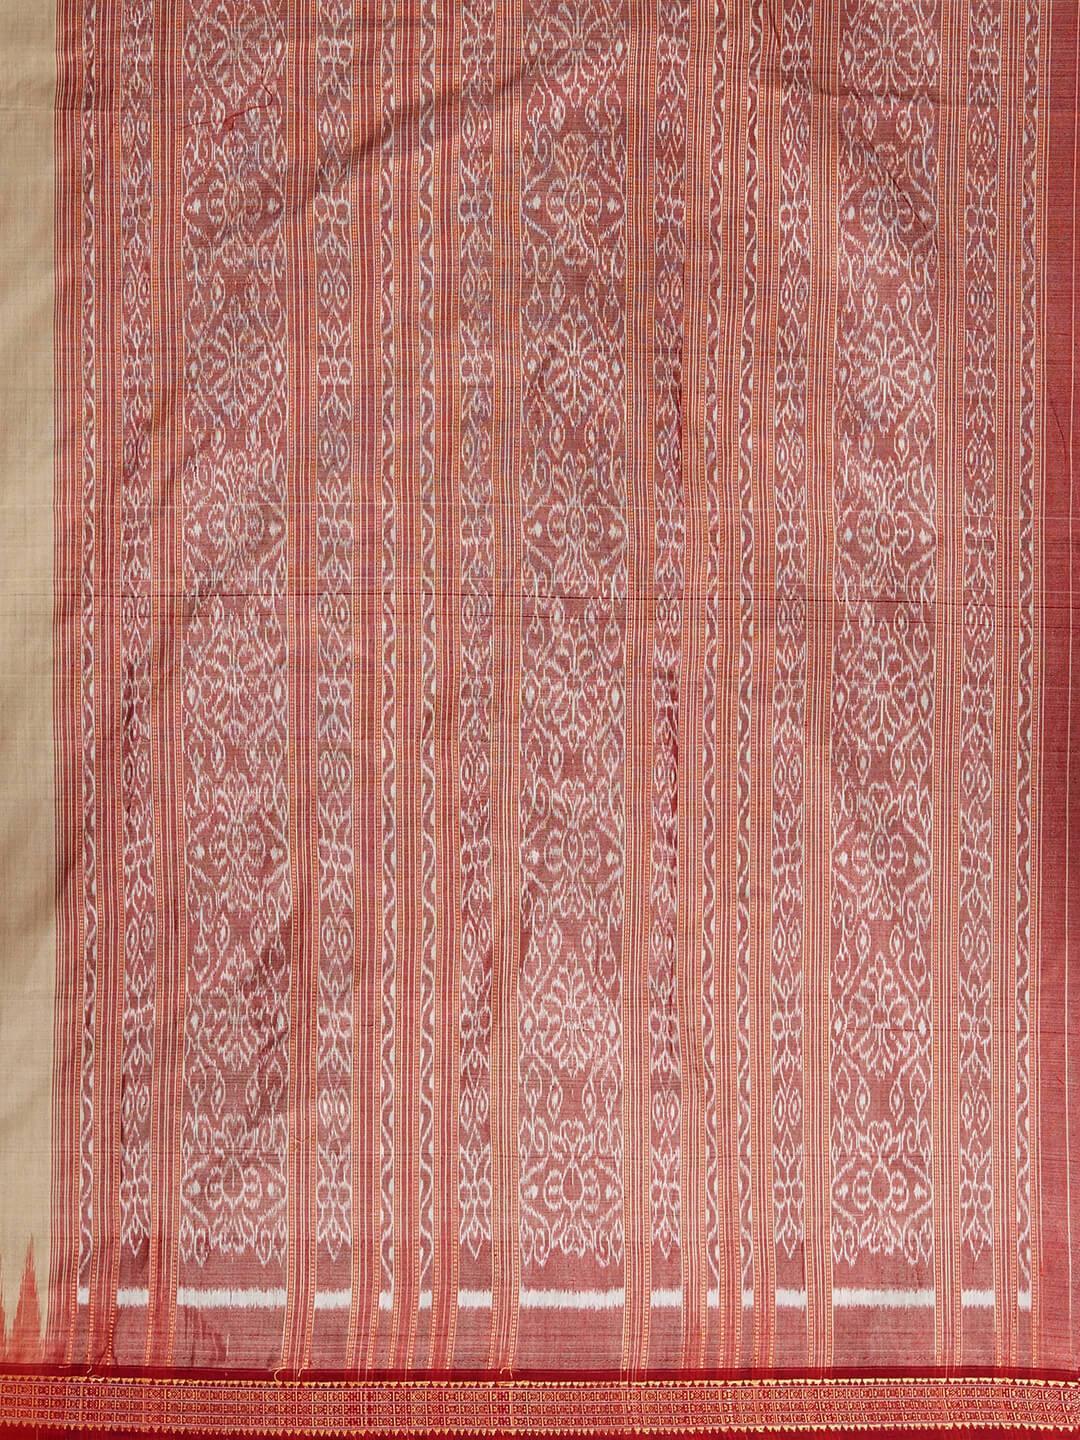 CraftsCollection.in -Beige and Red Cotton Sambalpuri Saree